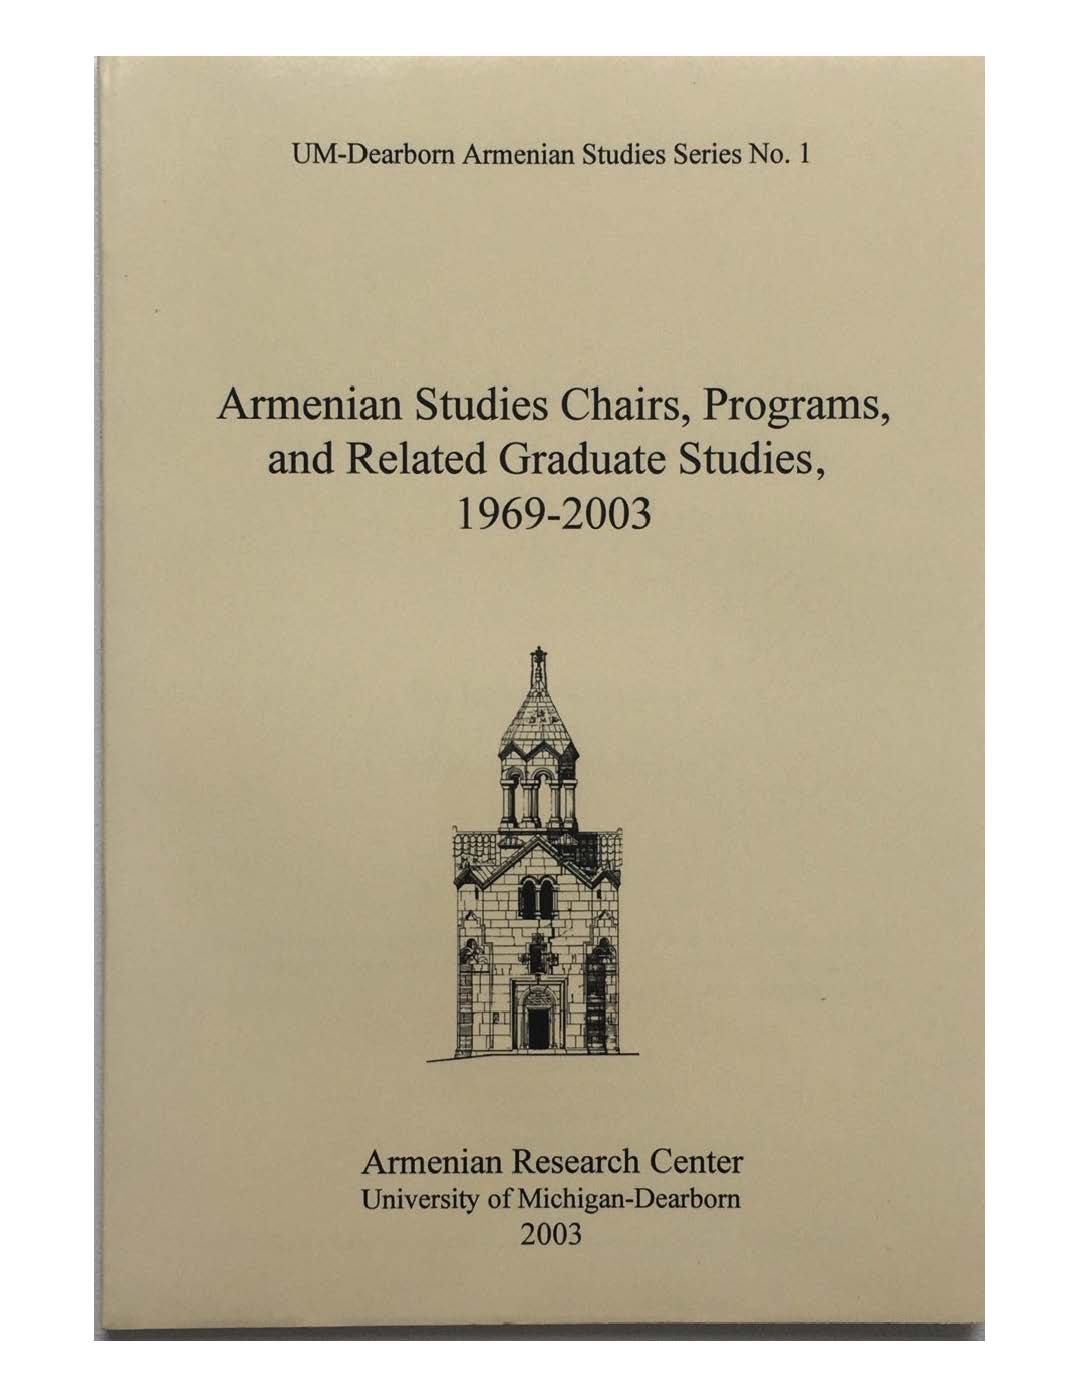 Armenian Studies Chairs, Programs and Related Graduate Studies, 1969-2003